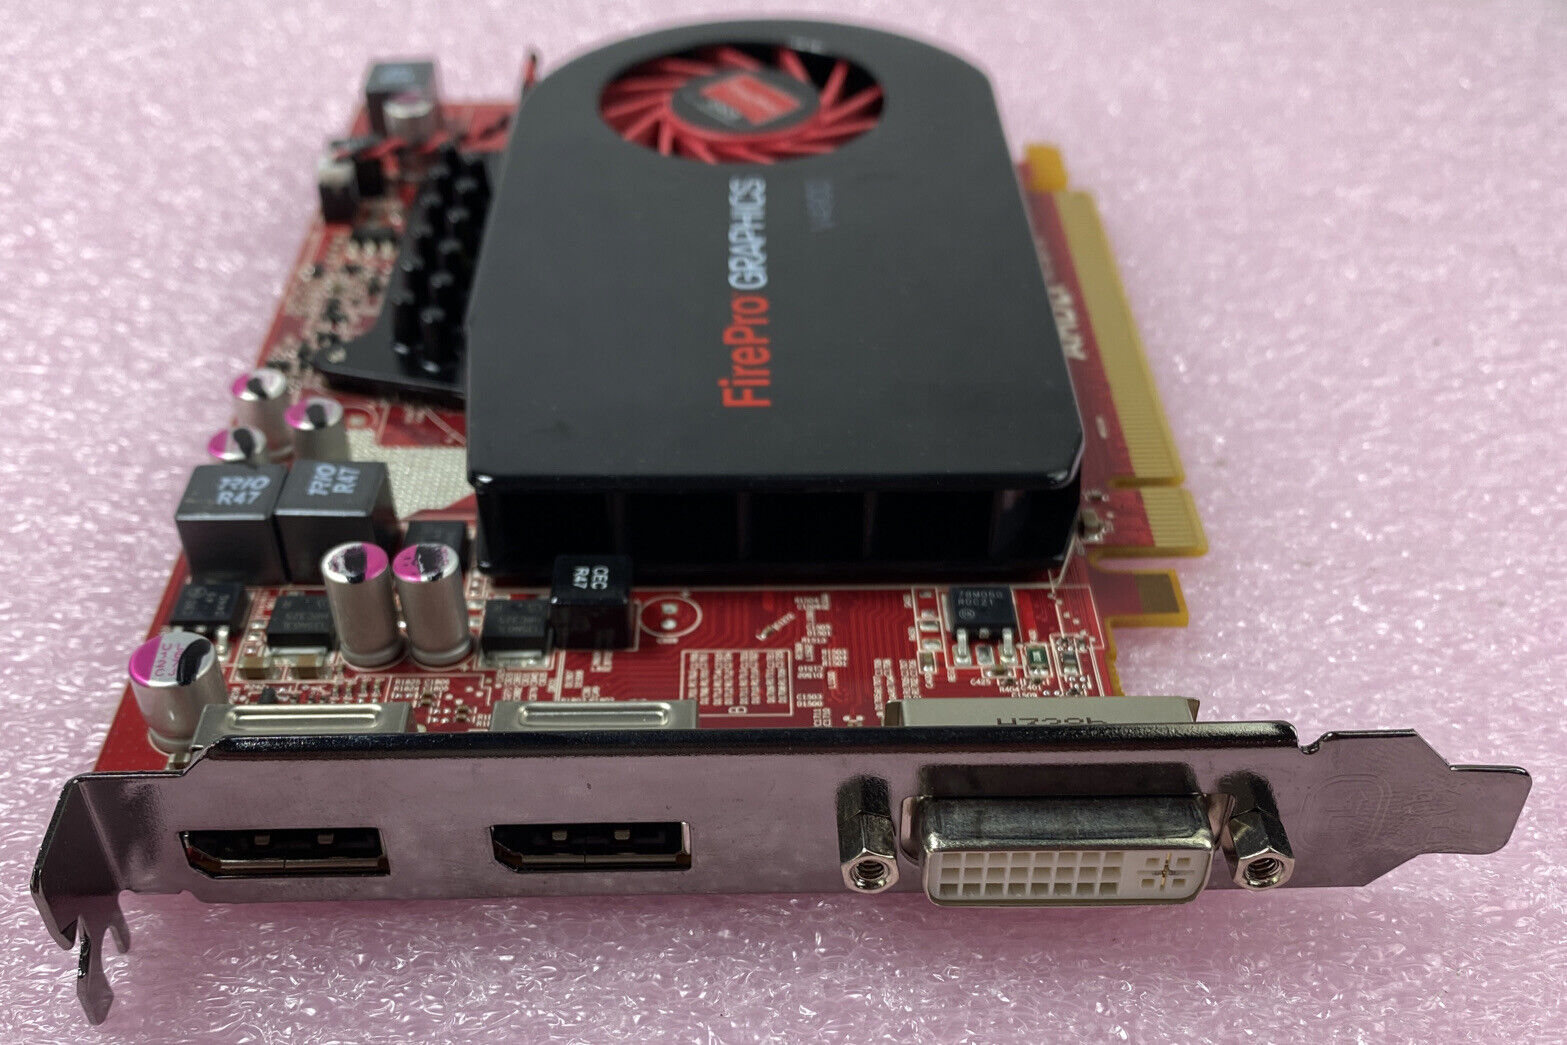 AMD 102C3380200 FirePro V4900 1GB 128-bit GDDR5 PCIe 2.1 x16 DVI DP Video Card